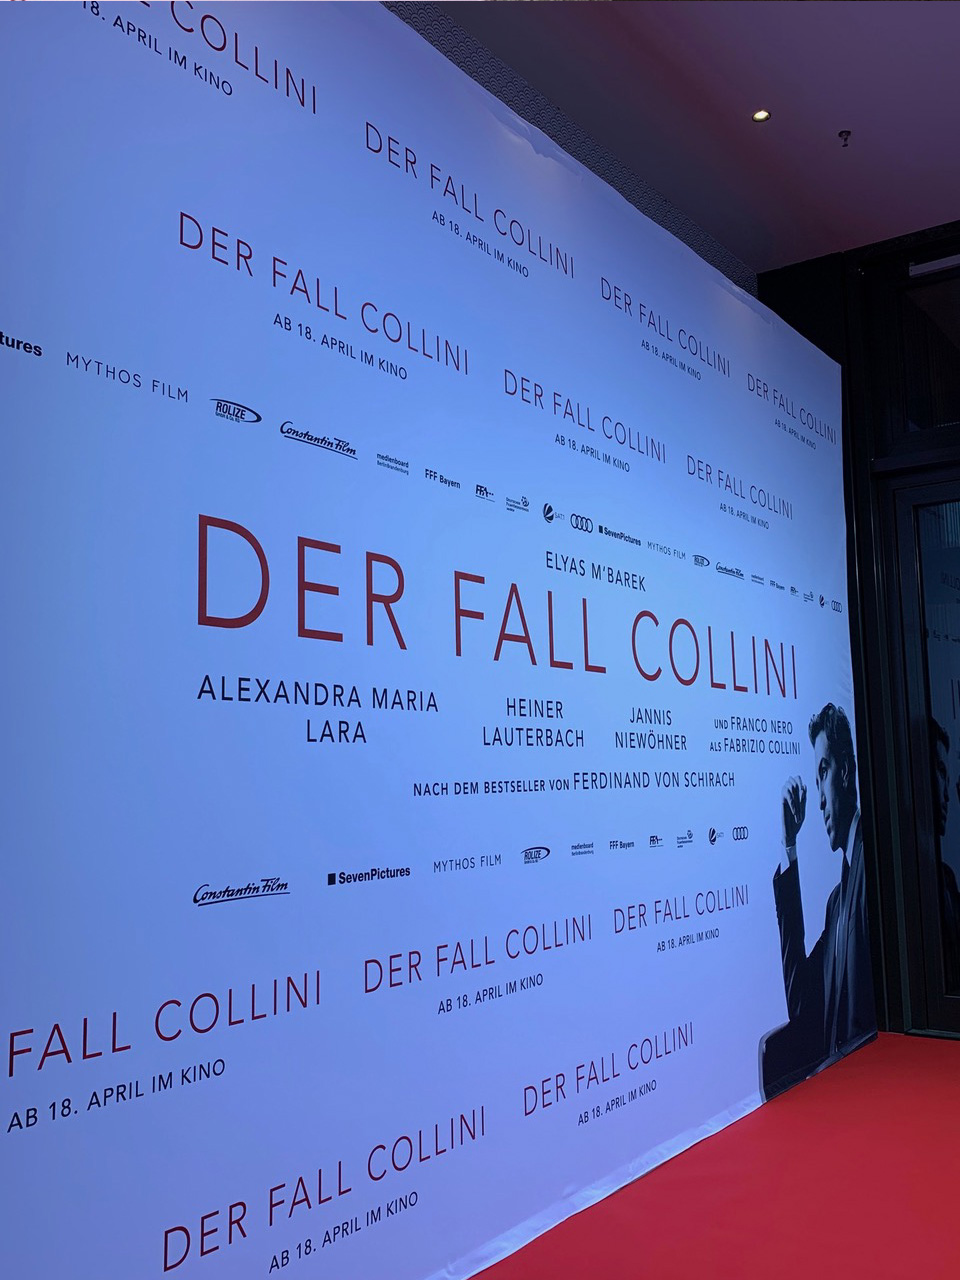 Filmpremiere "Der Fall Collini" (April 2019) - Bild 4